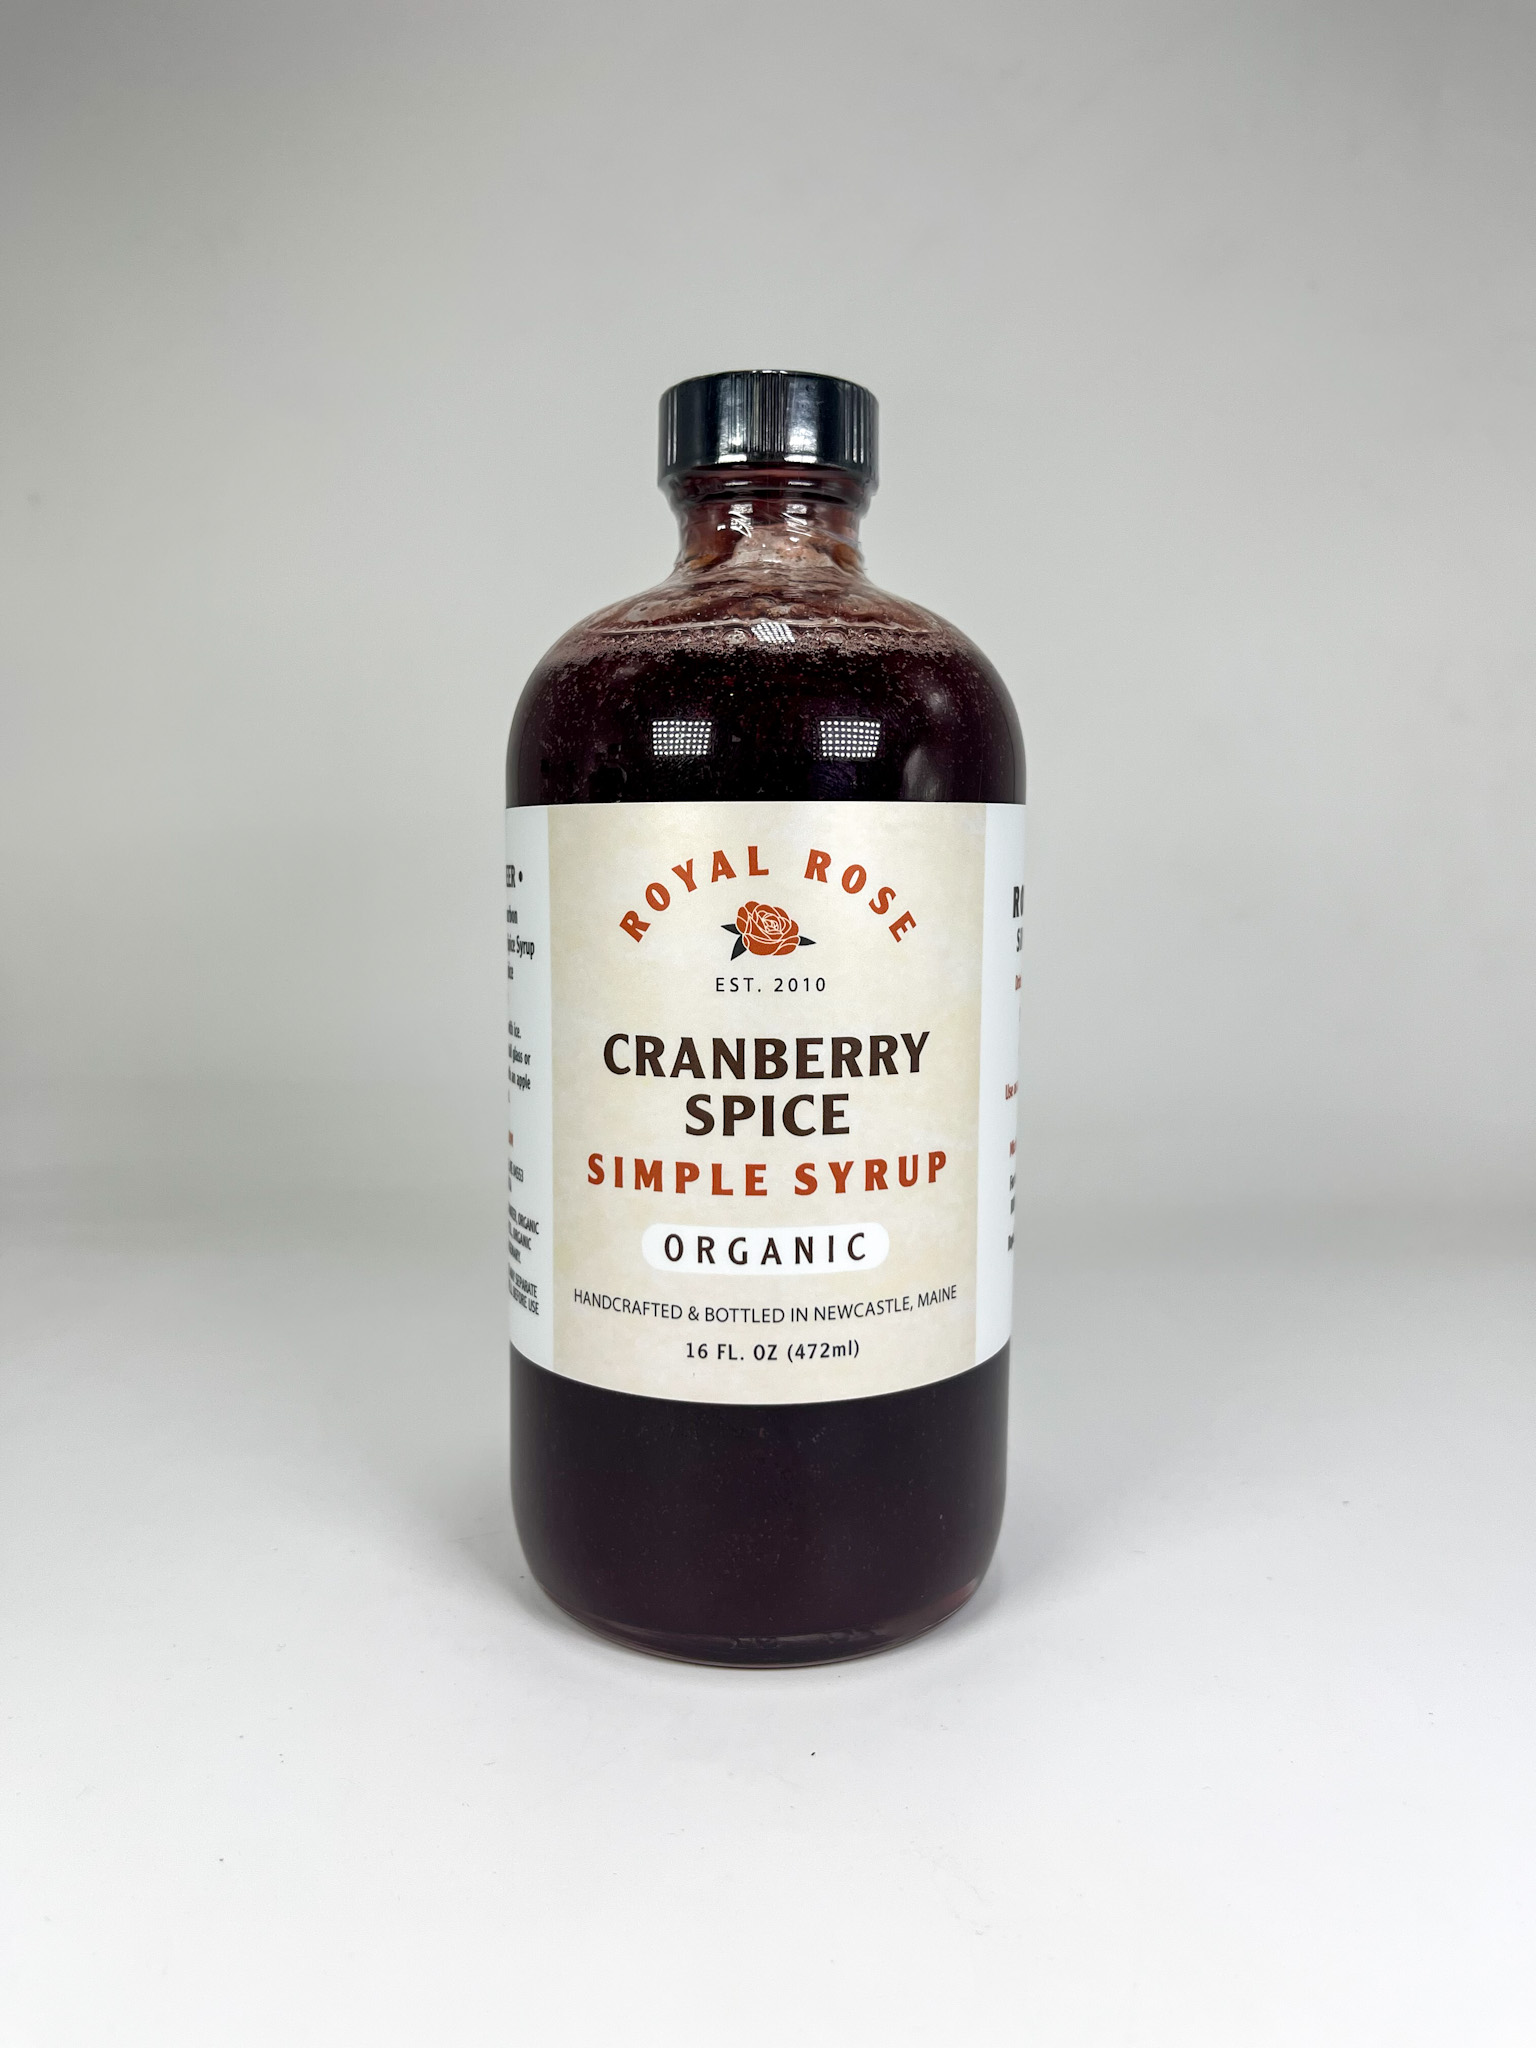 Royal Rose Organic Simple Syrups - Maine Grains